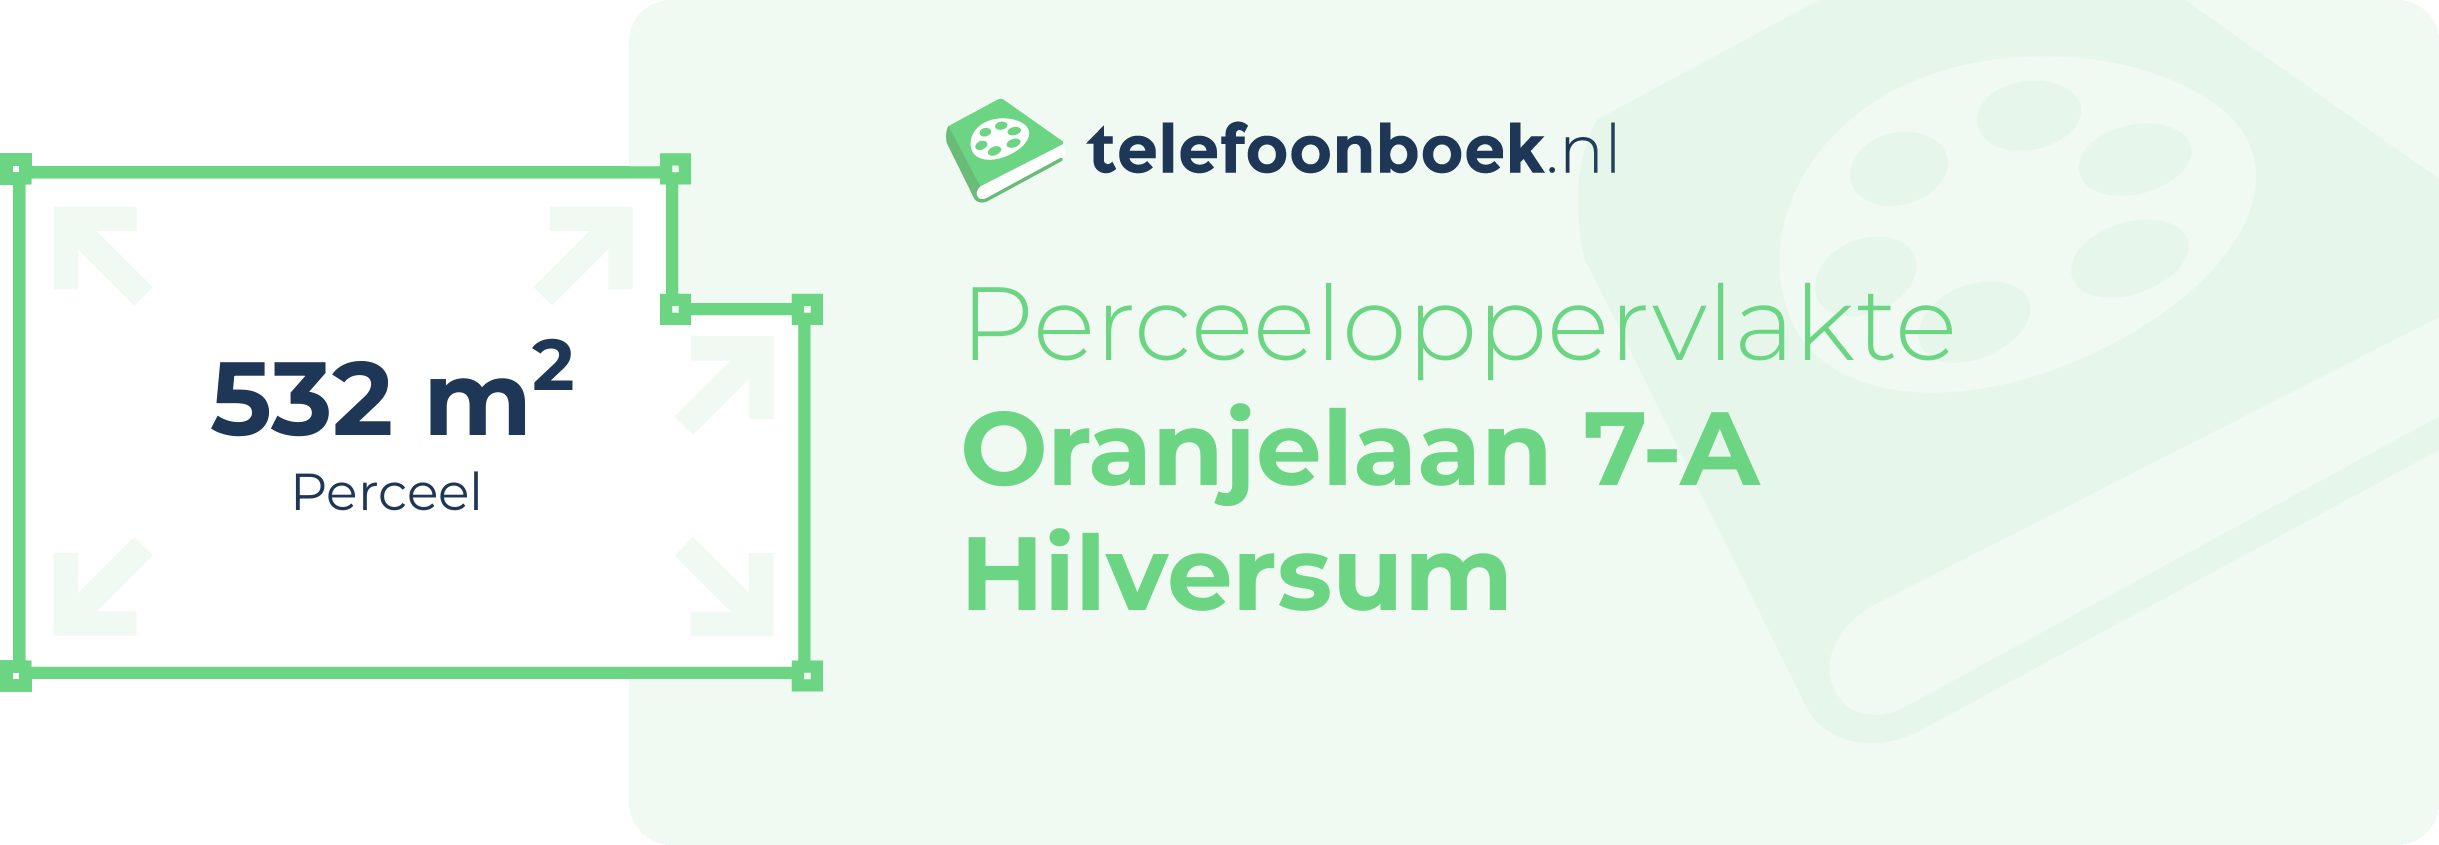 Perceeloppervlakte Oranjelaan 7-A Hilversum